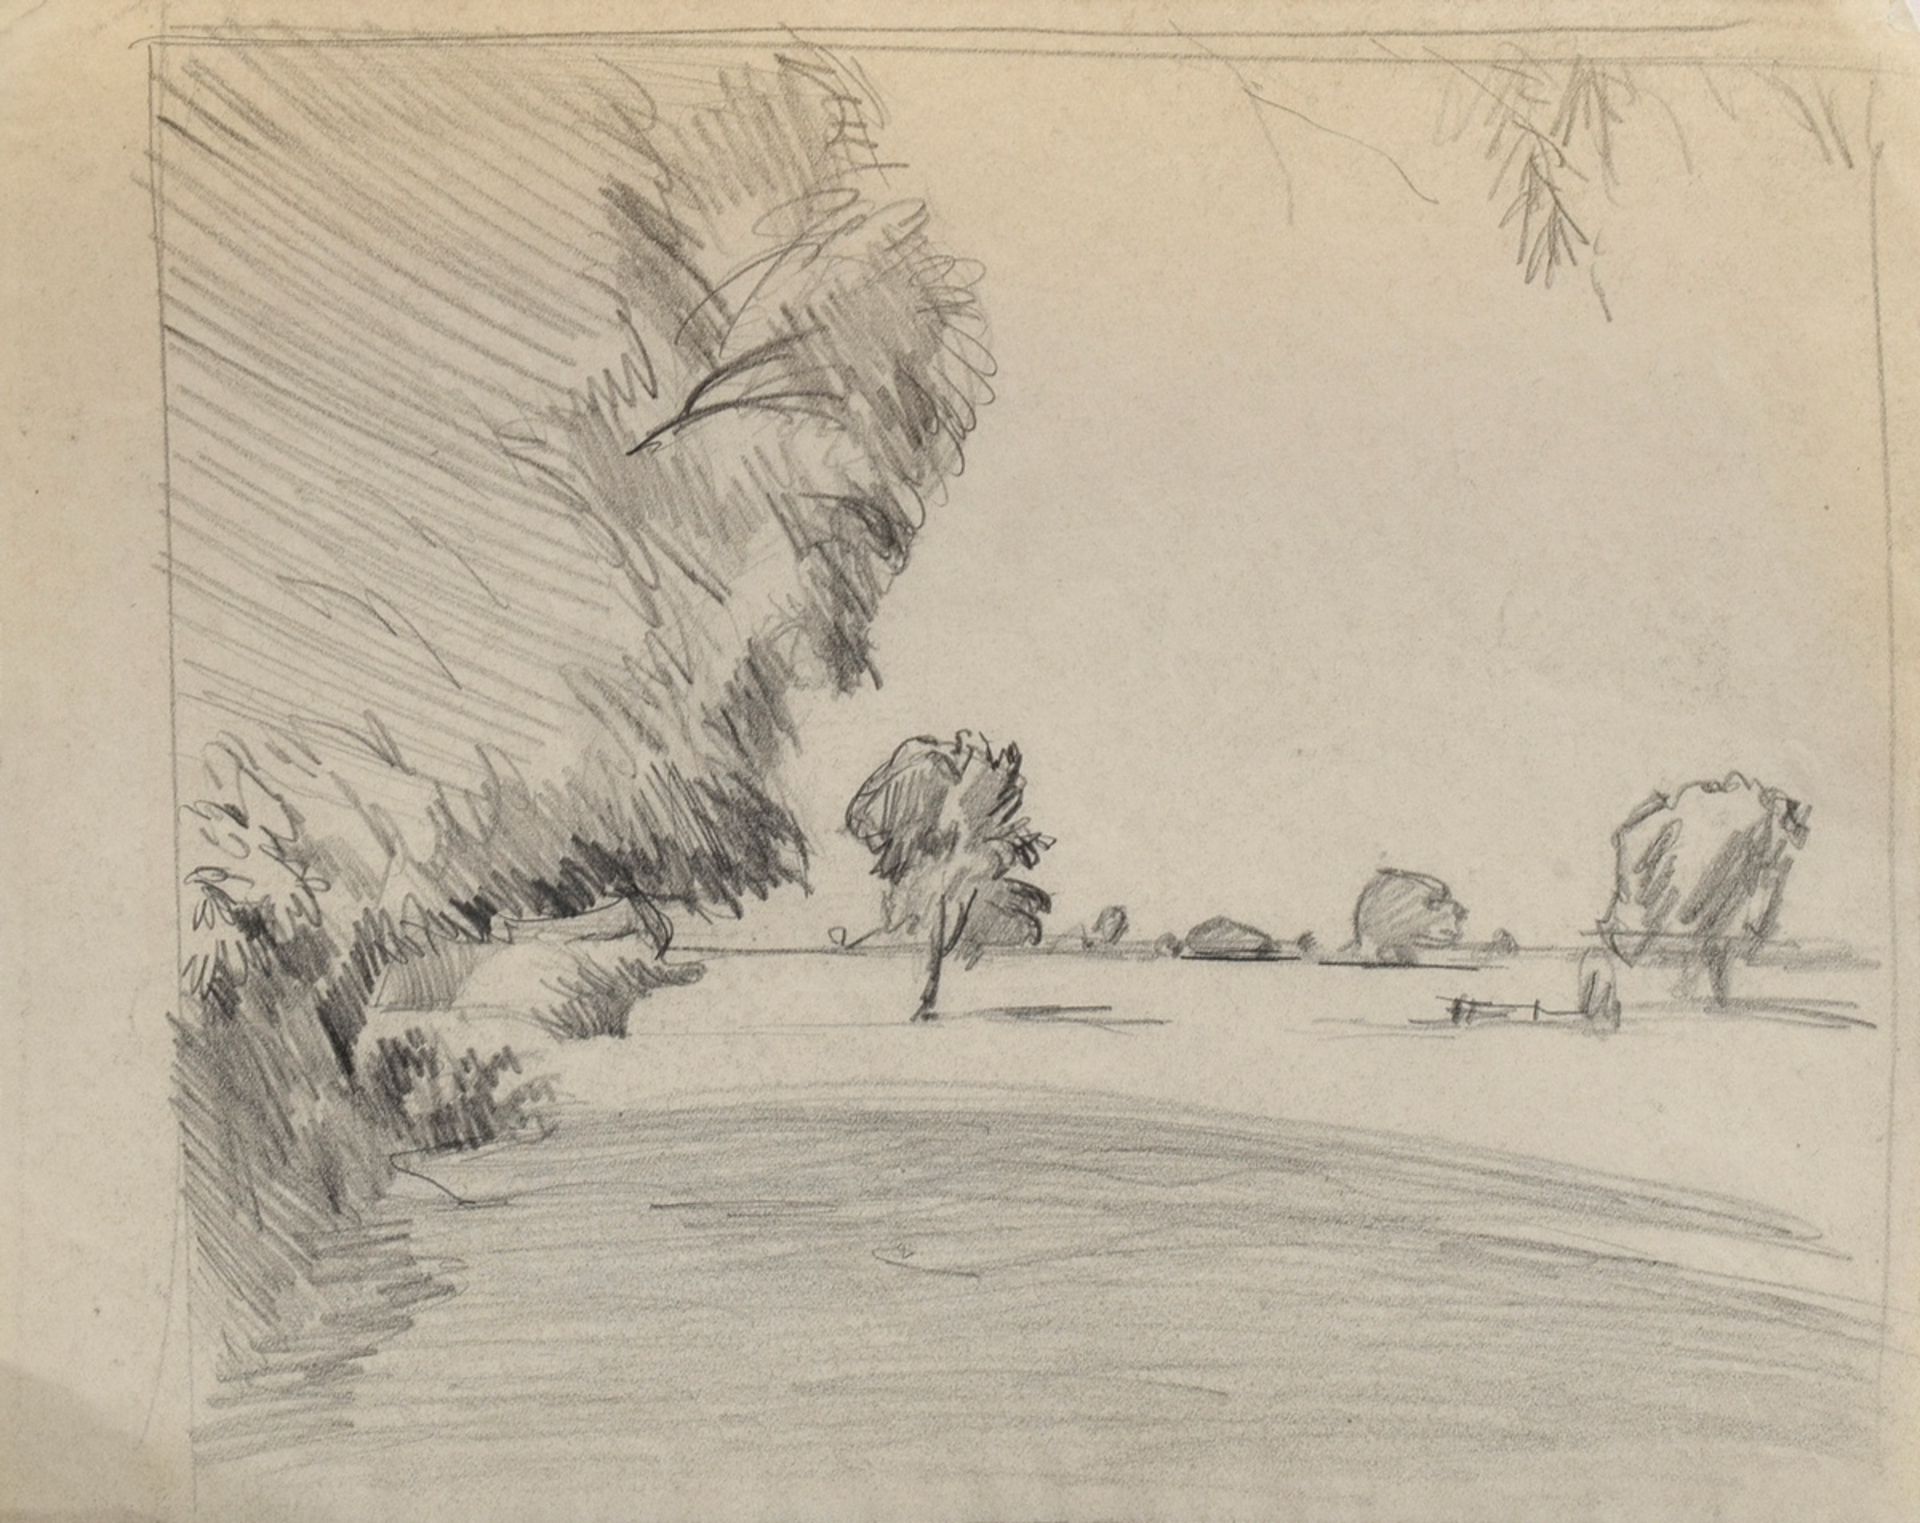 Kayser, Jean-Paul (1869-1942) "Pasture", pencil drawing, verso estate information, 21.5x27cm, sligh